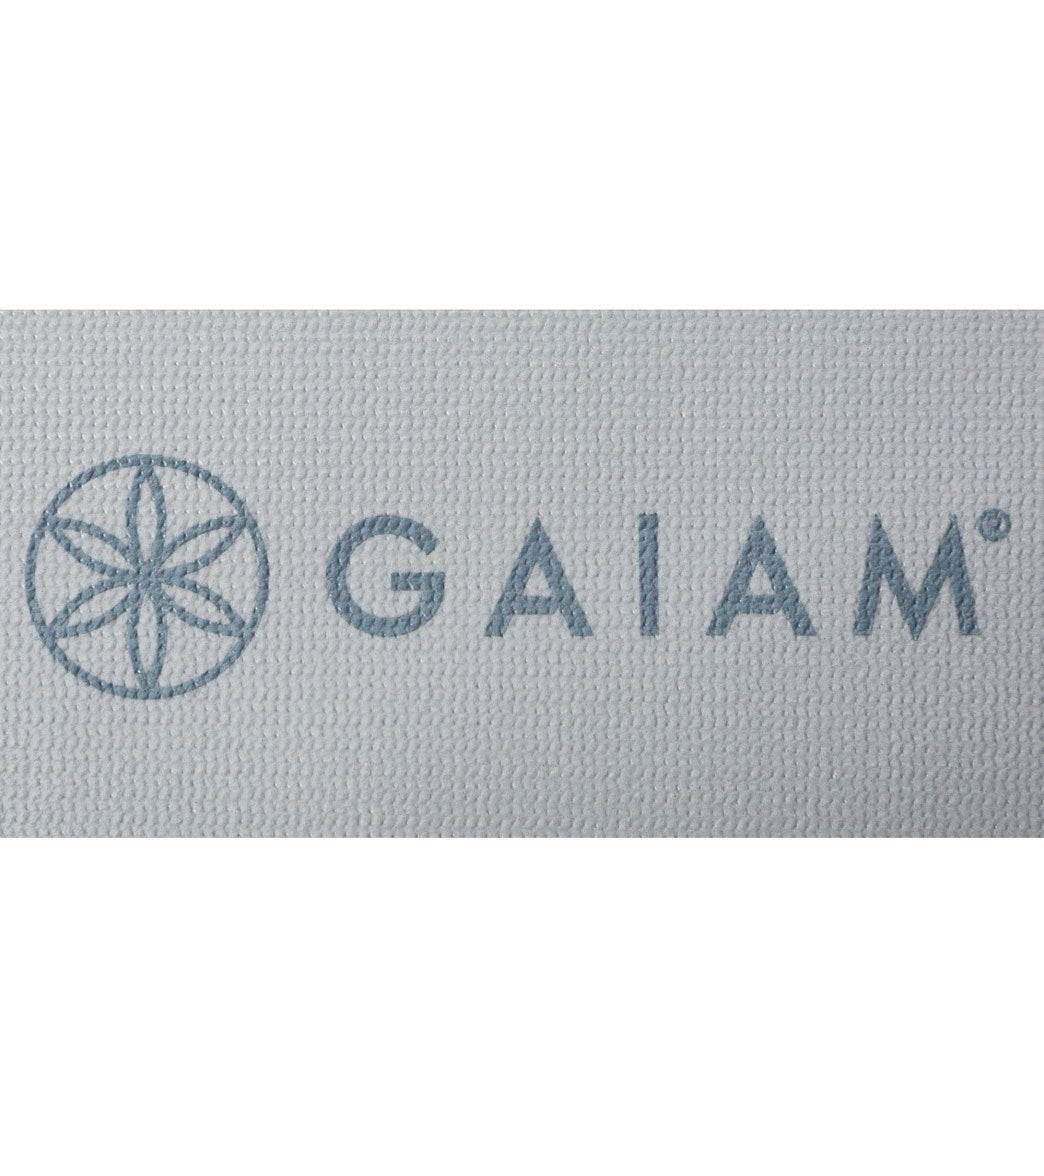 Gaiam Foldable Yoga Mat Super Compact Ultra Lightweight Blue 2MM